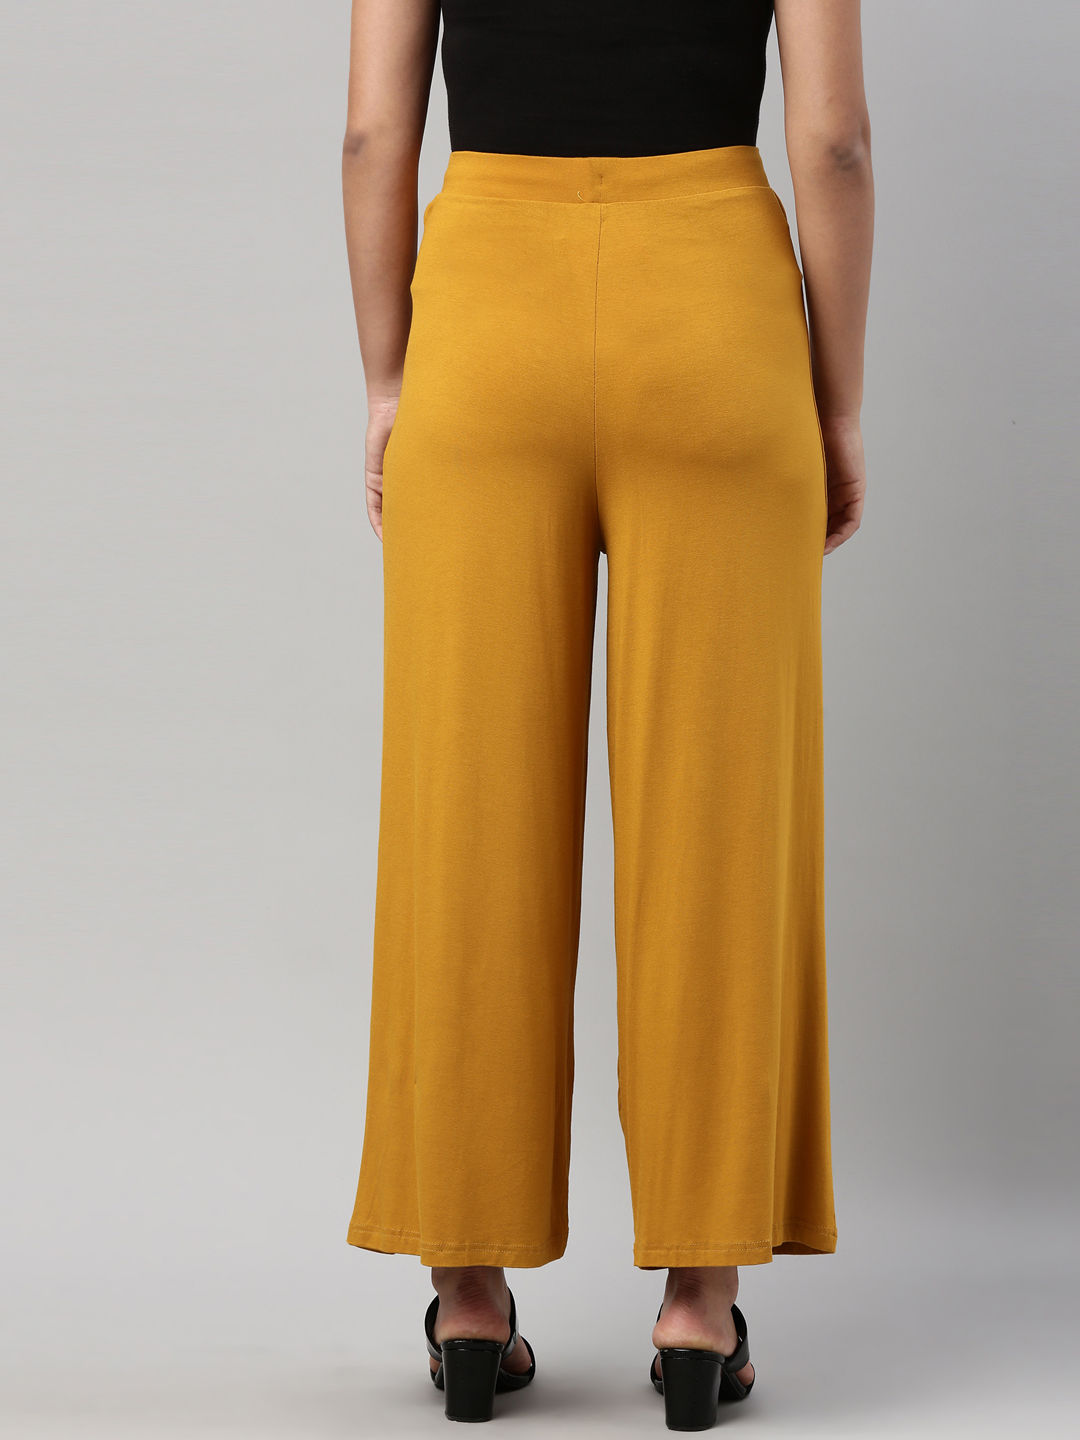 Fashion Nova Do You Wanna Bet Yellow Wide Leg Flowy Palazzo Pants Womens  Size XL | eBay